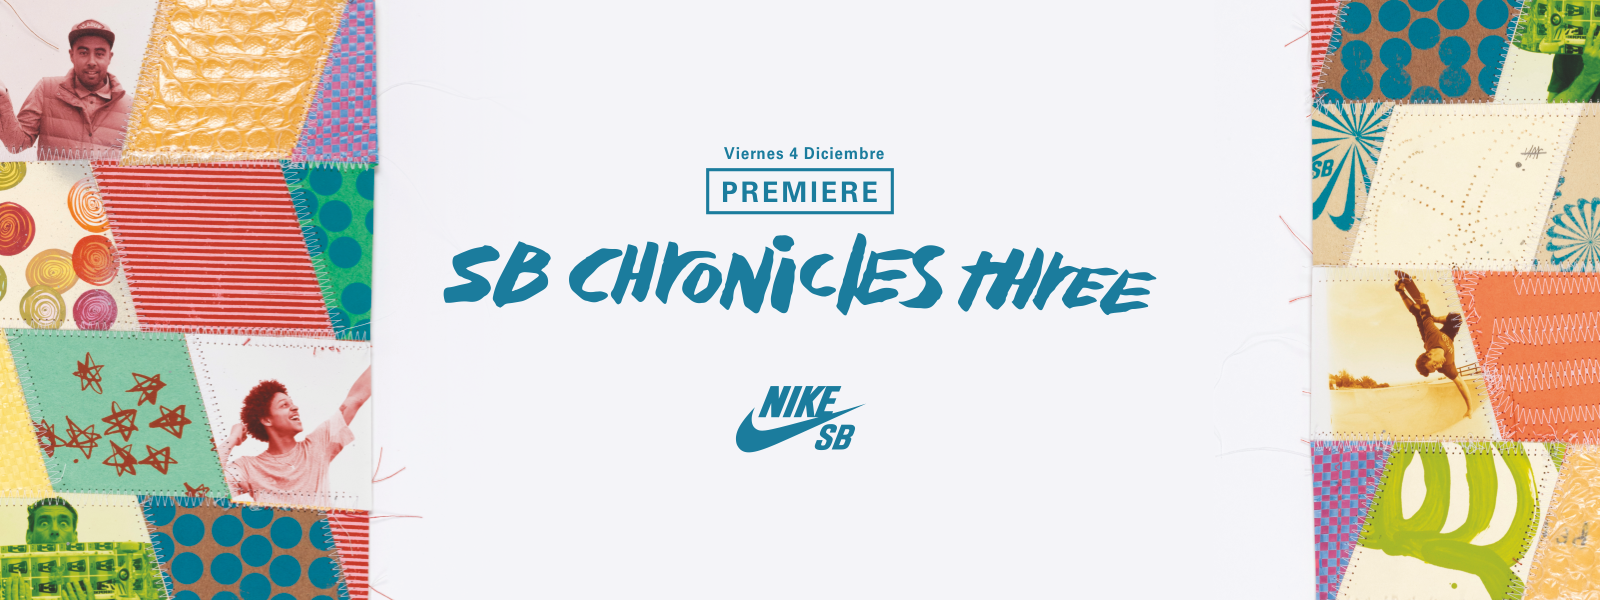 nike sb chronicles 3